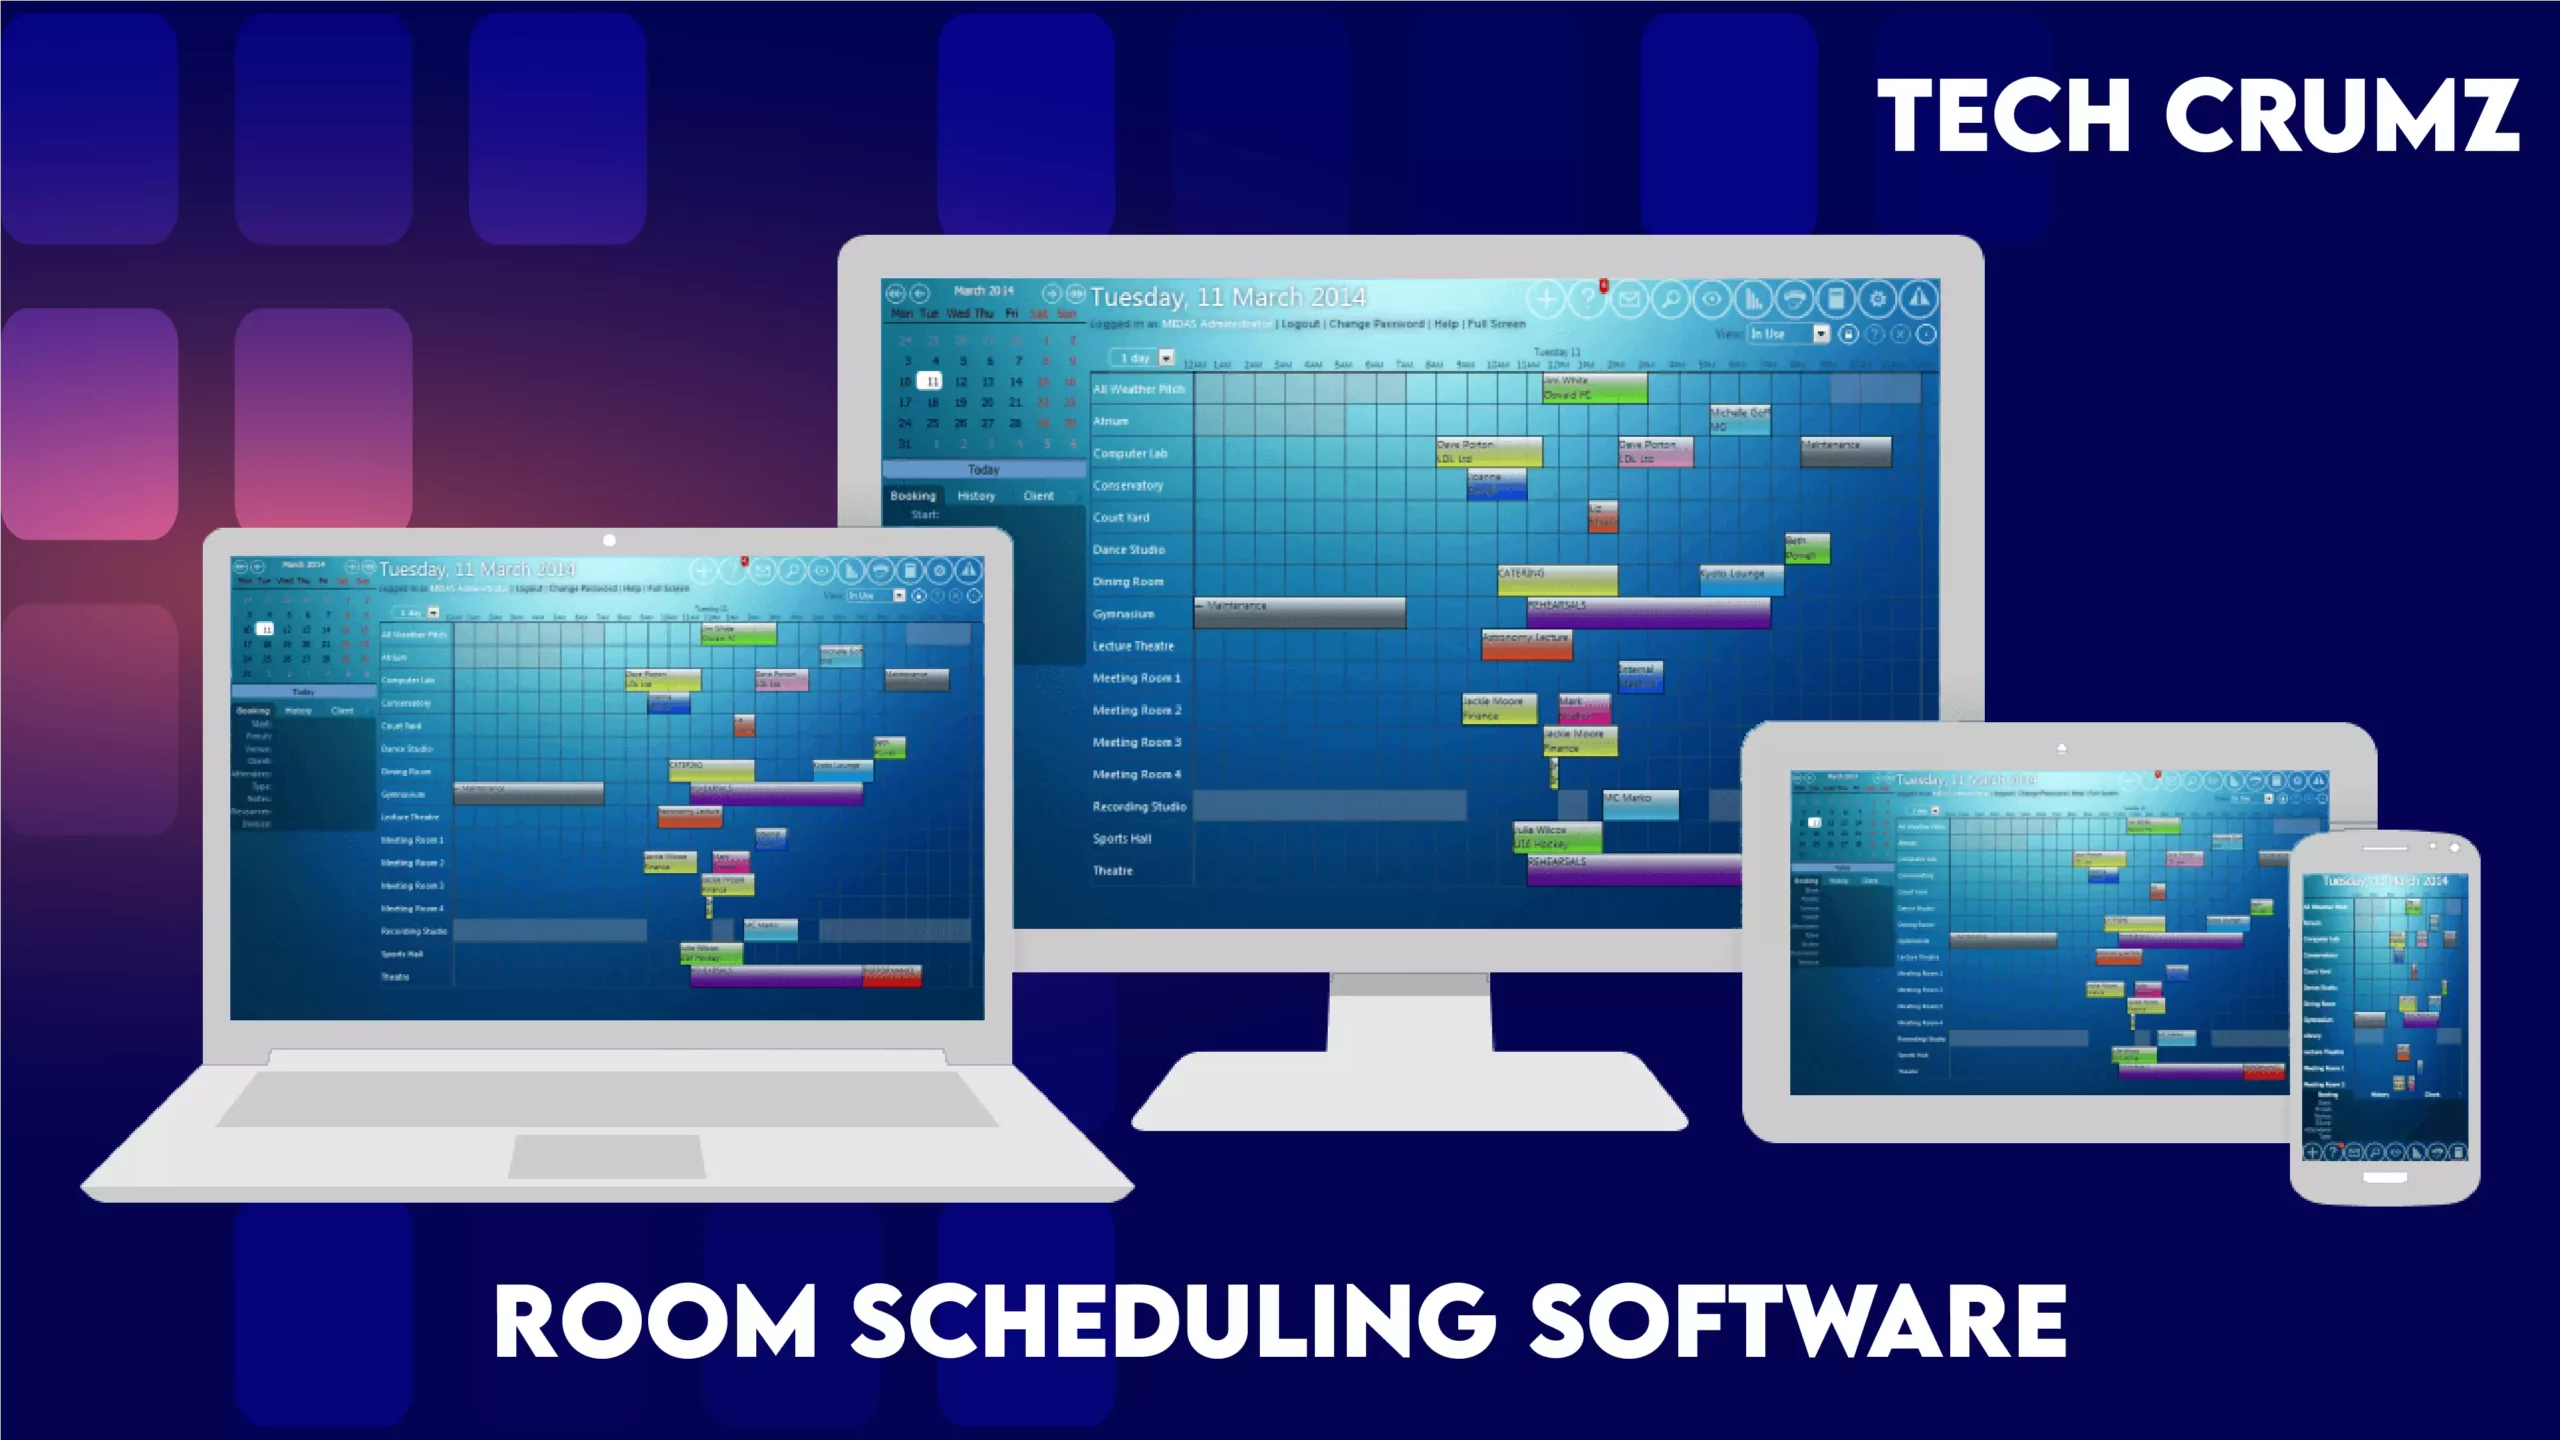 Room Scheduling Software